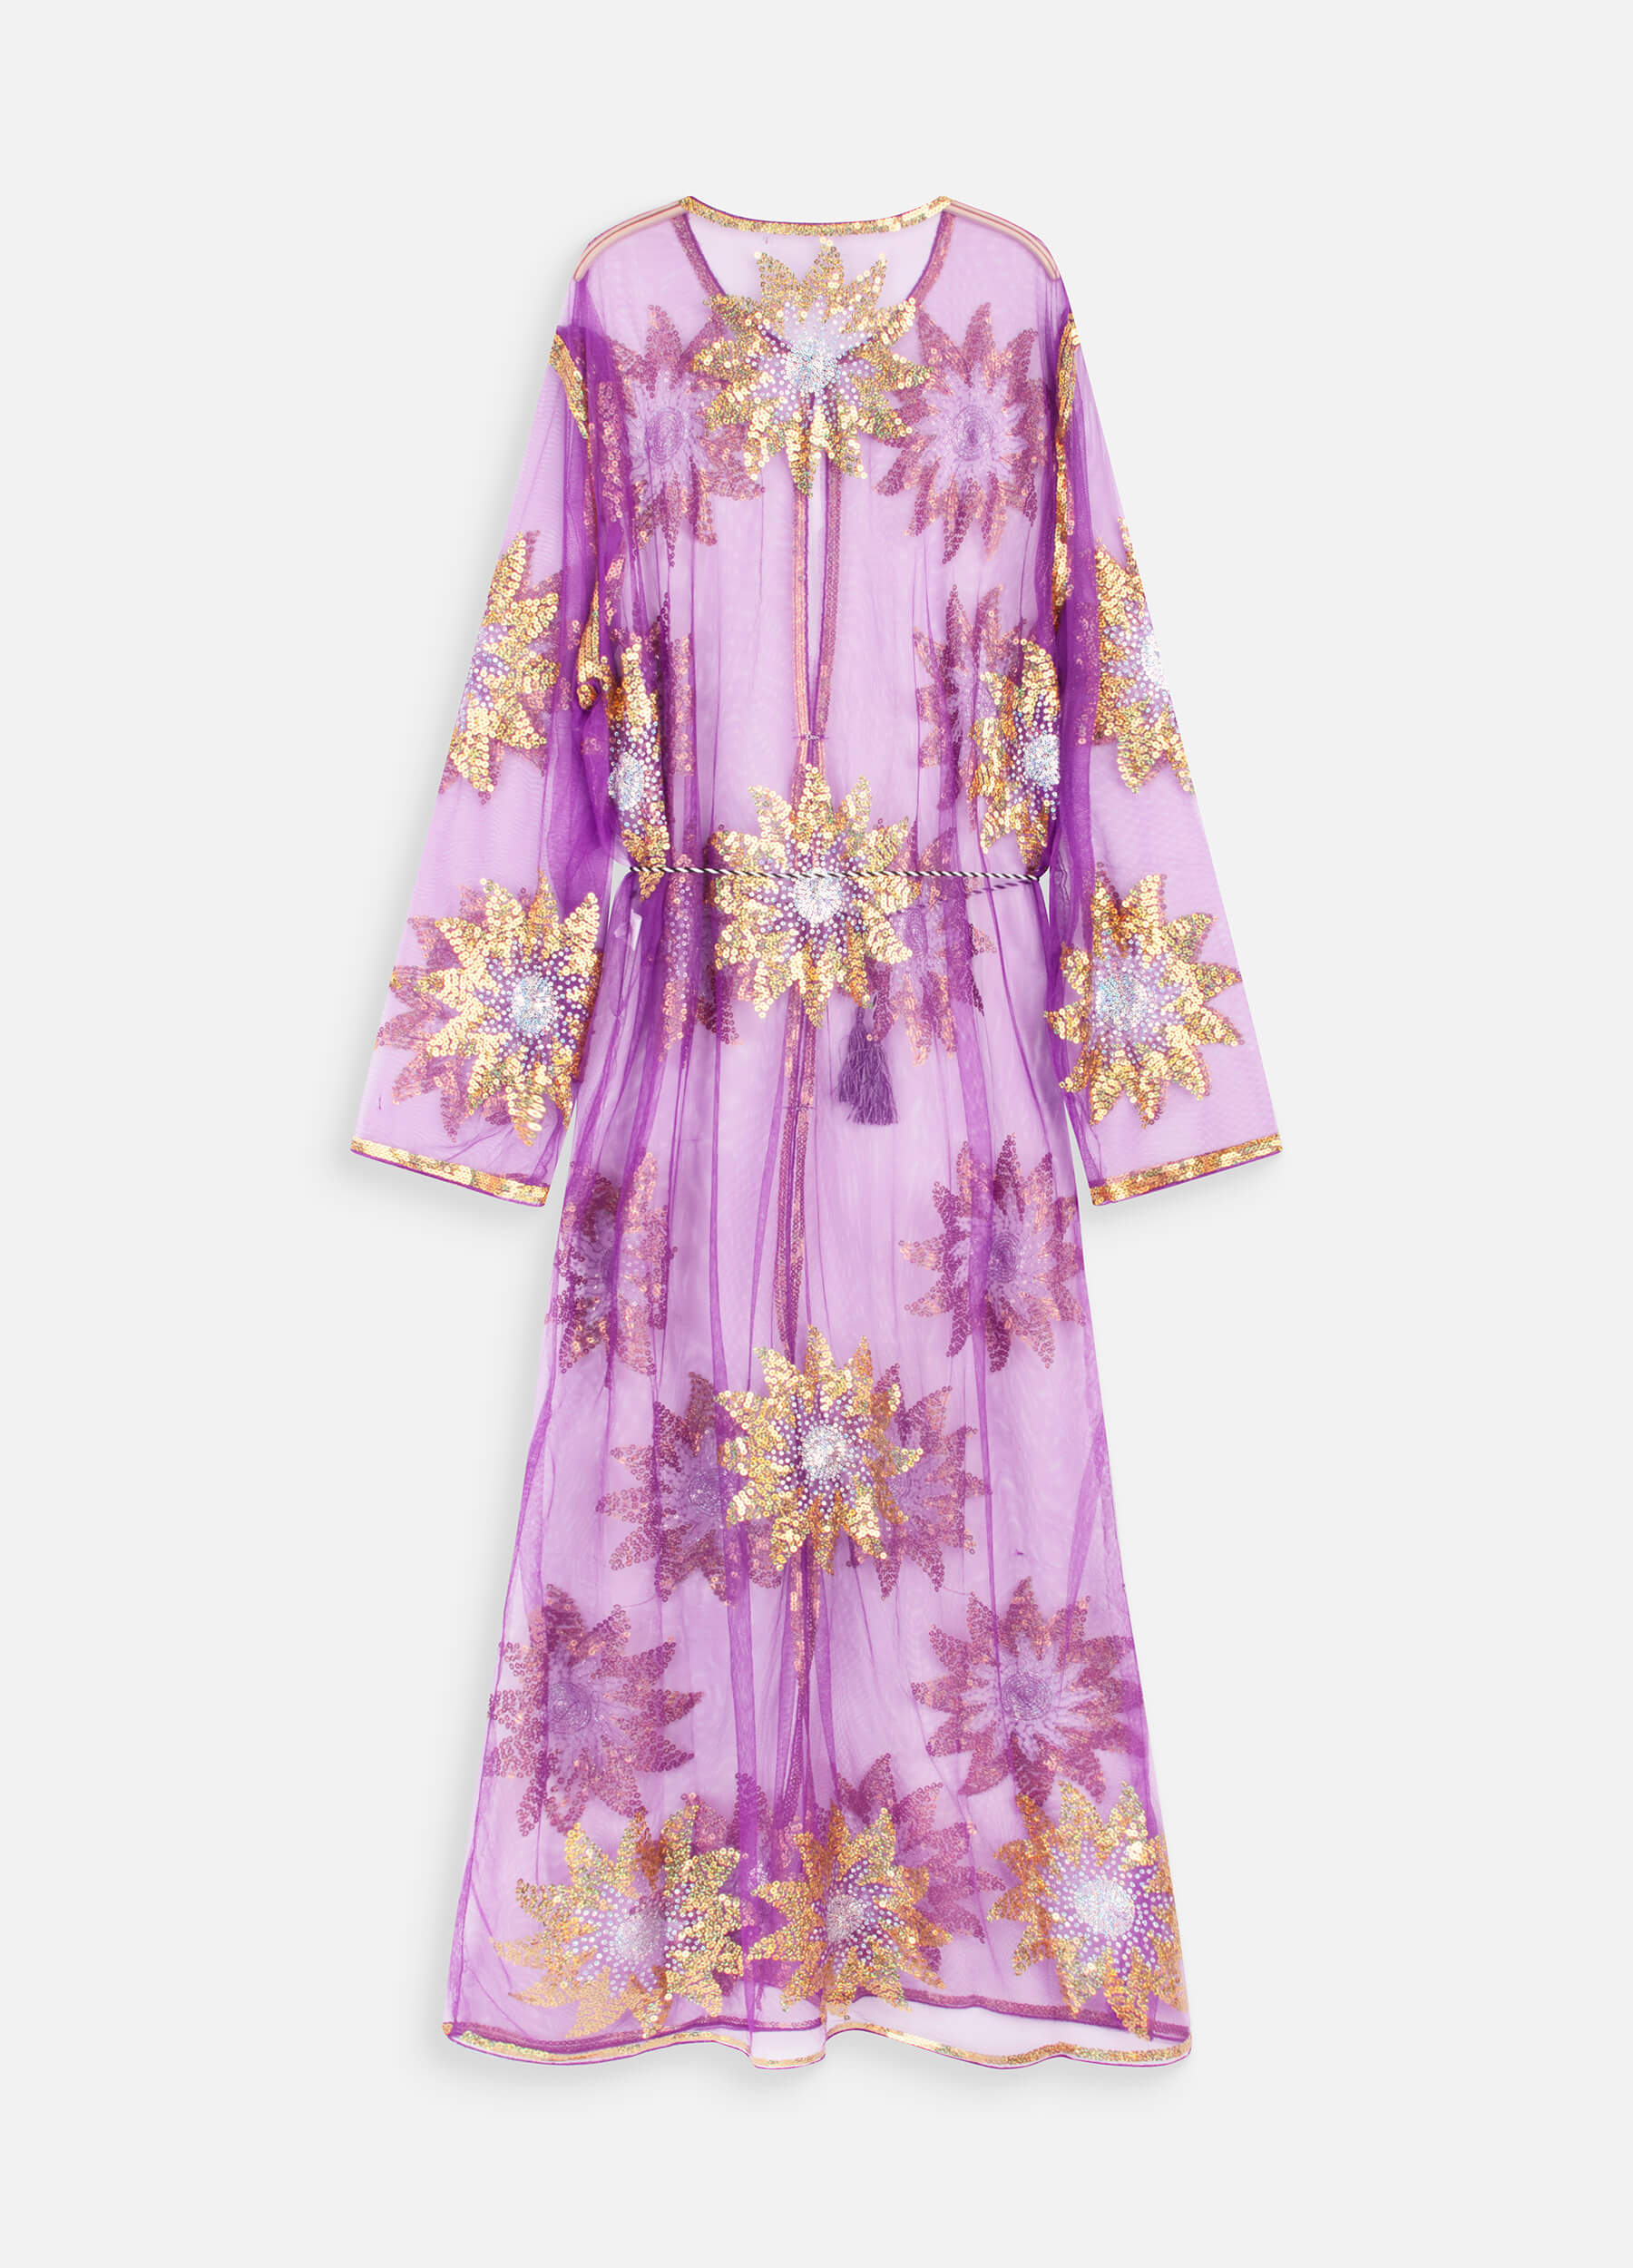 MECALA Women's Floral Sequin Maxi Mesh Kimono Cardigan Plus Size Purple Sheer Cardigan Kftan with Drawstring